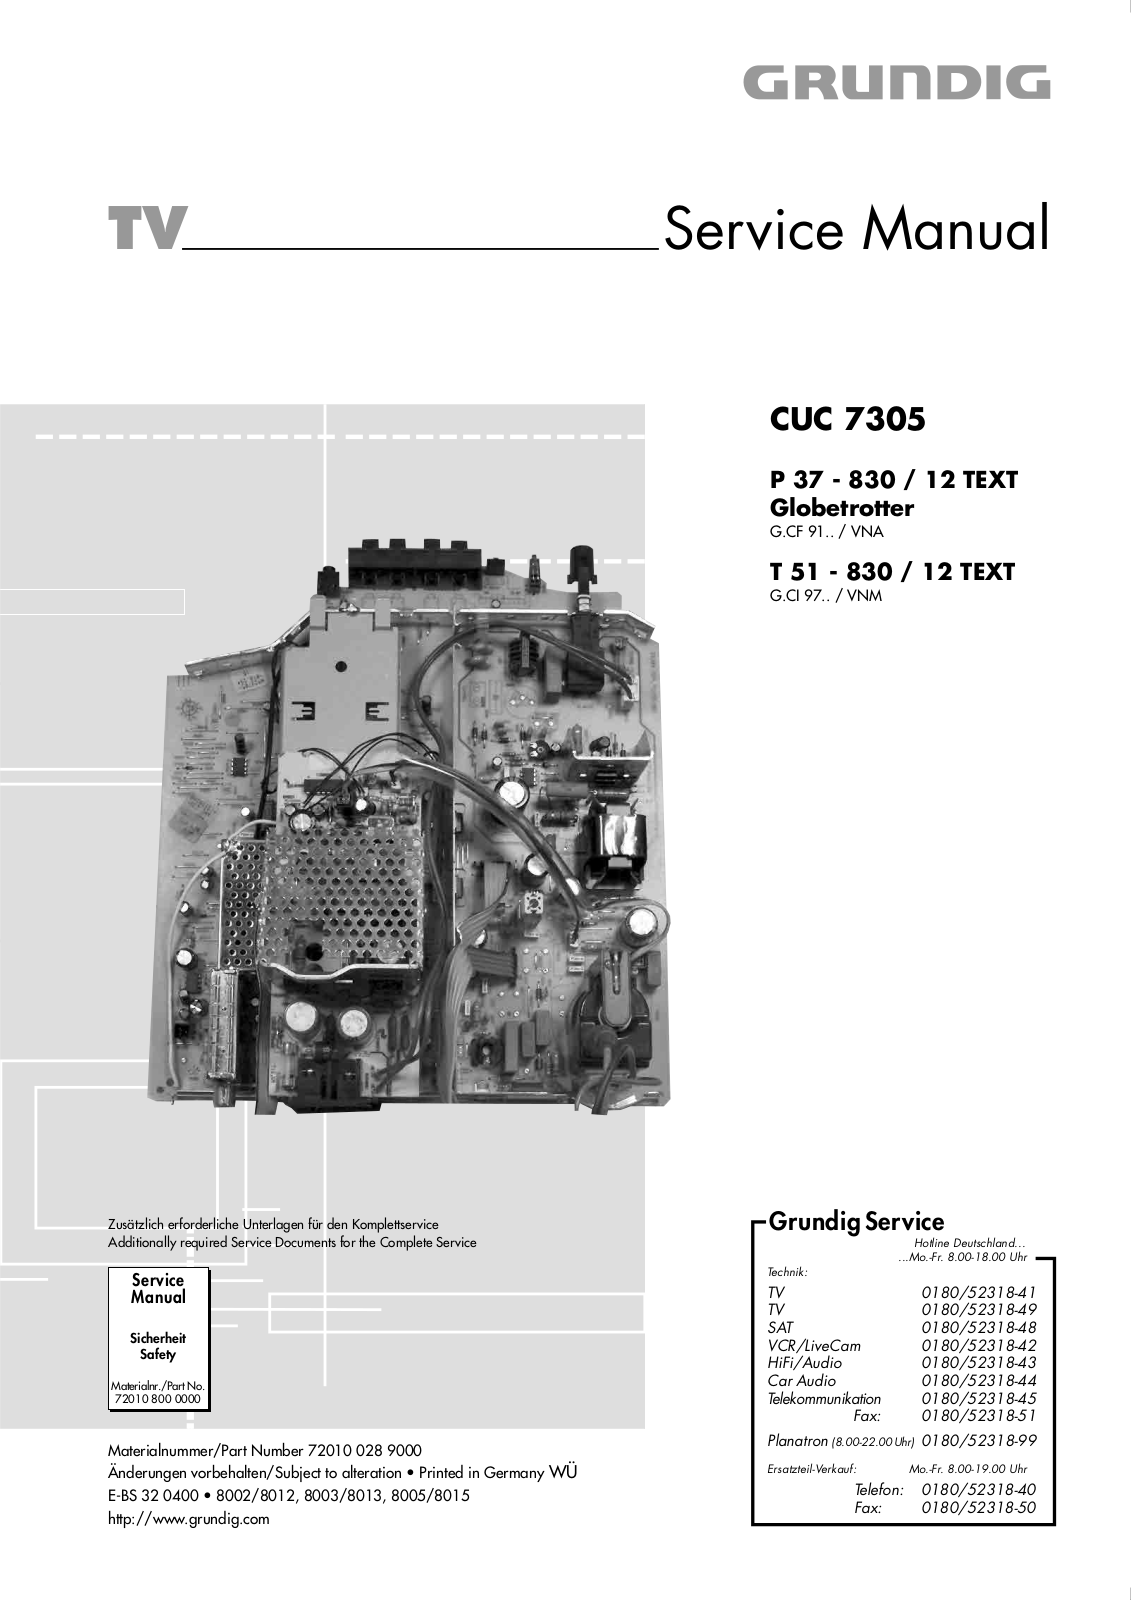 Grundig T 51 - 830 - 12, CUC 7305 Service Manual